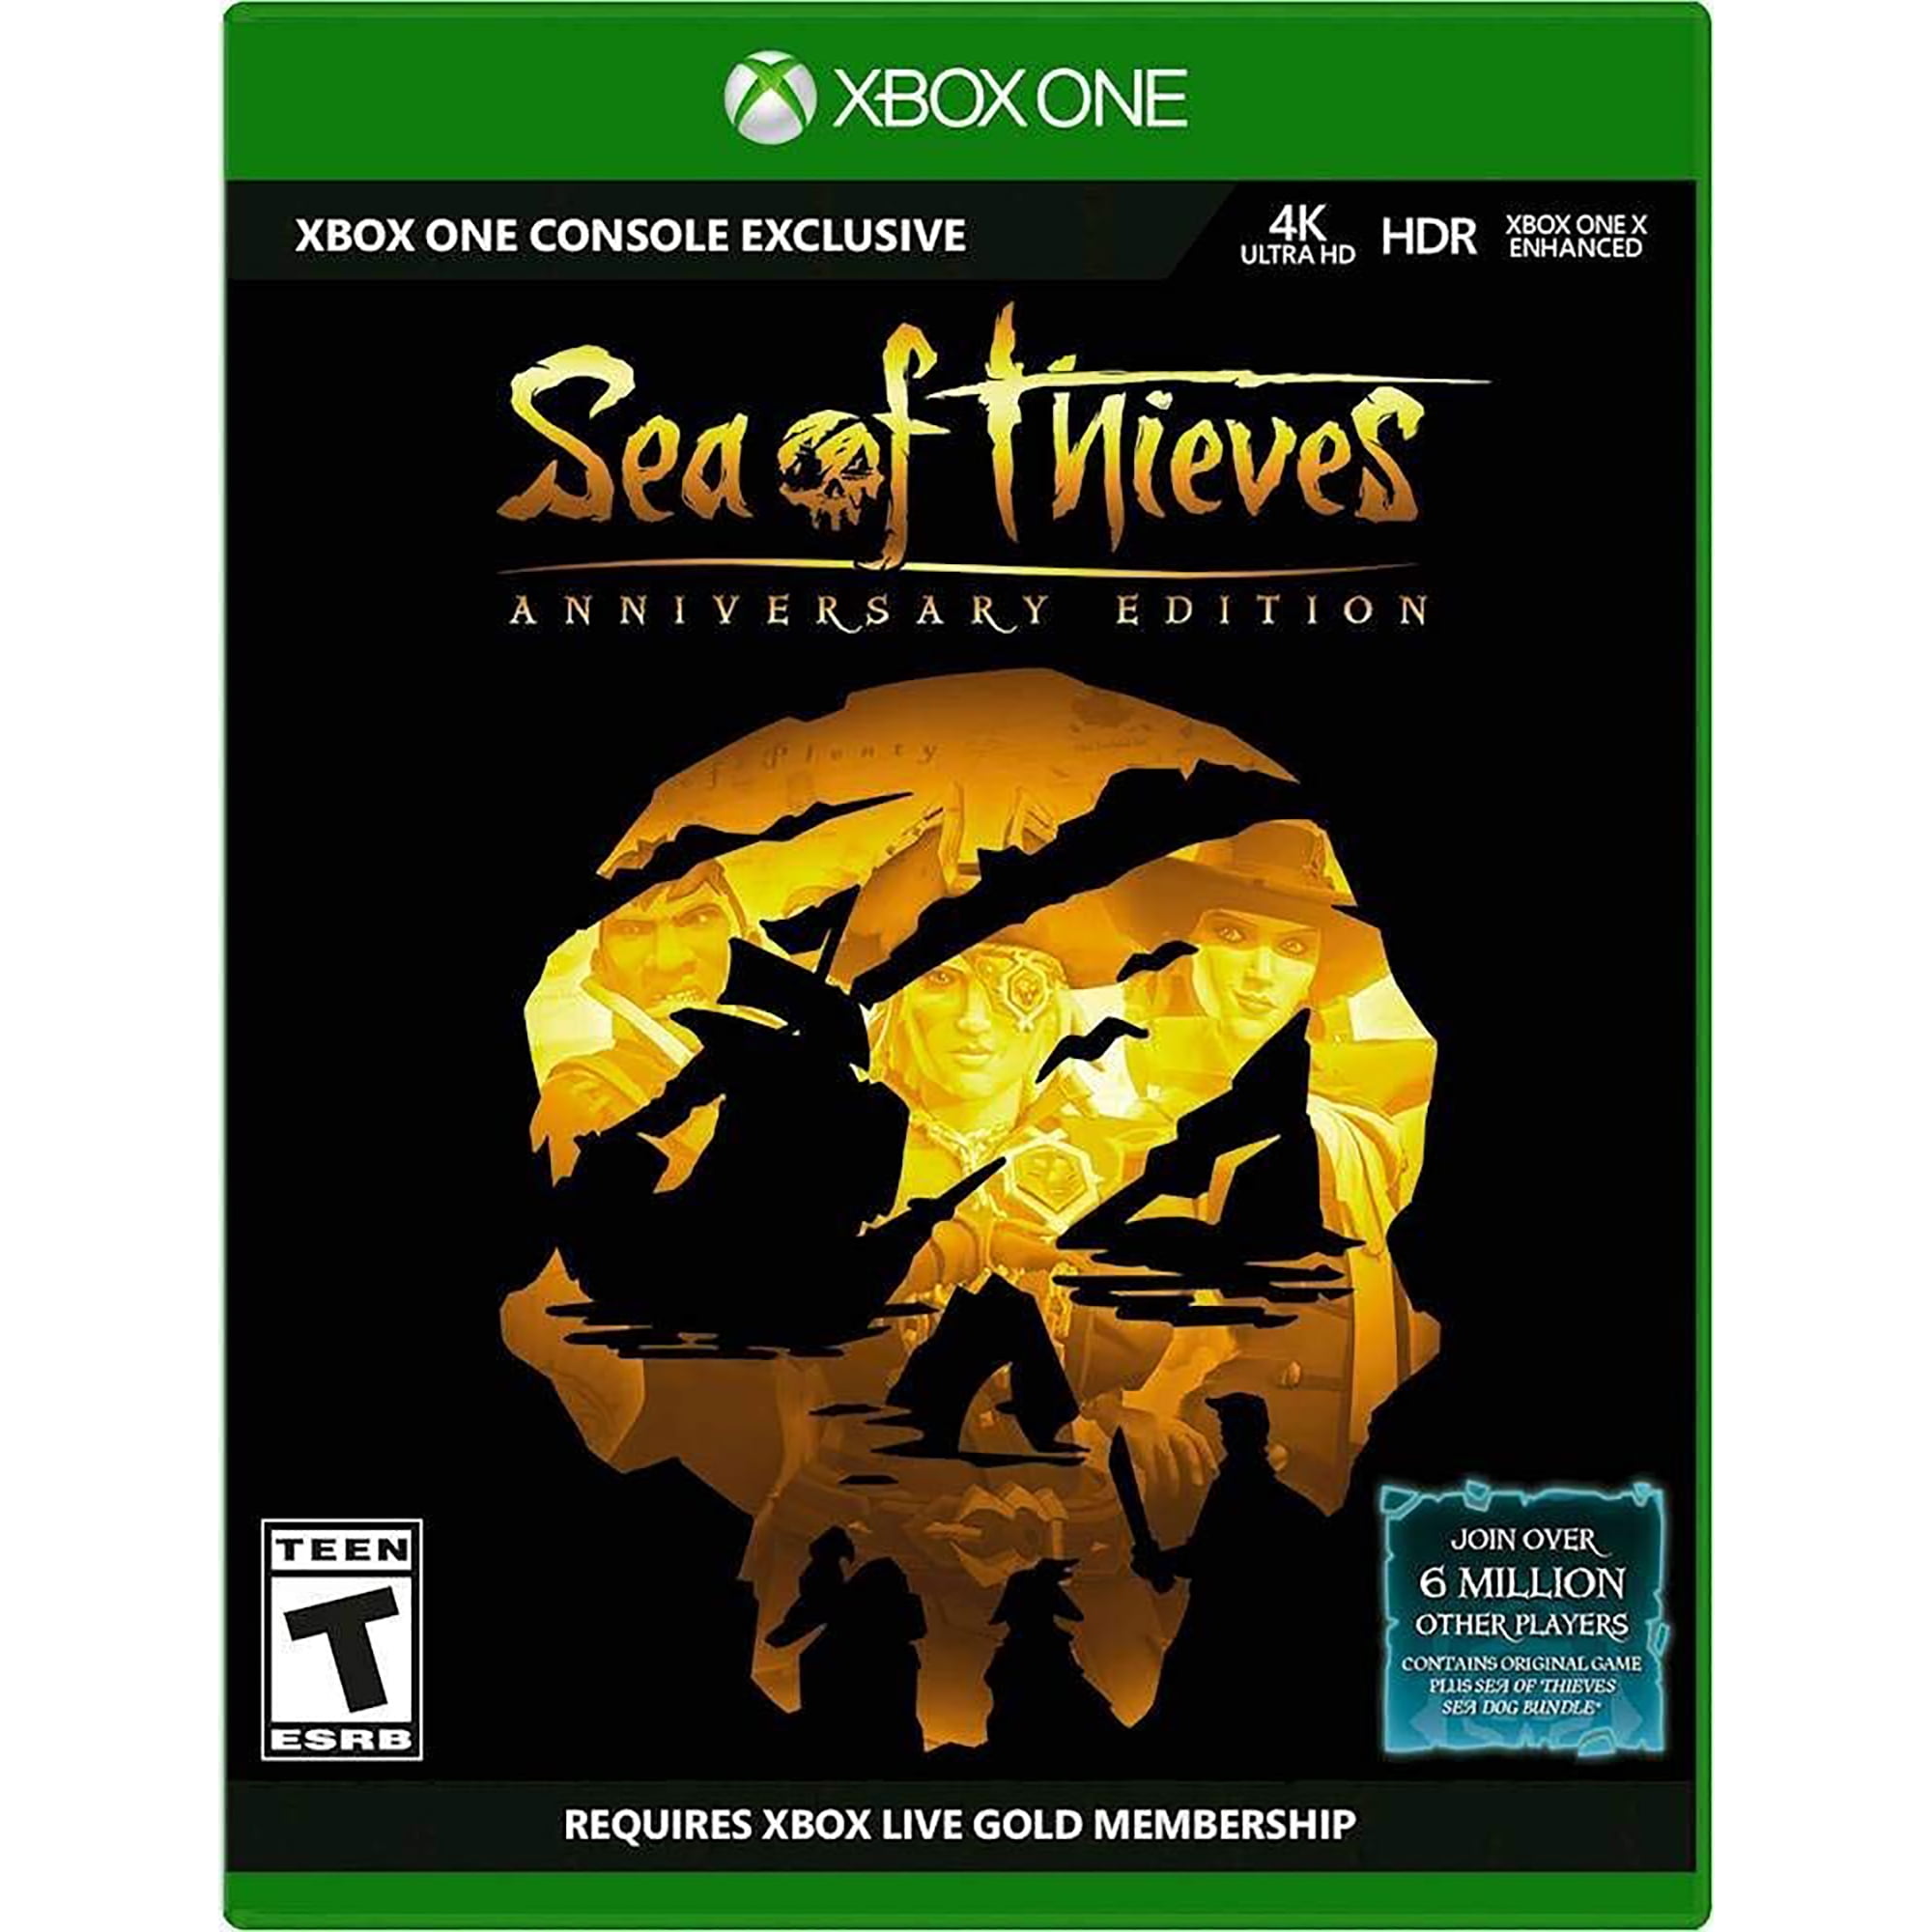 Sea of Stars Achievements - Xbox Series, Xbox One 